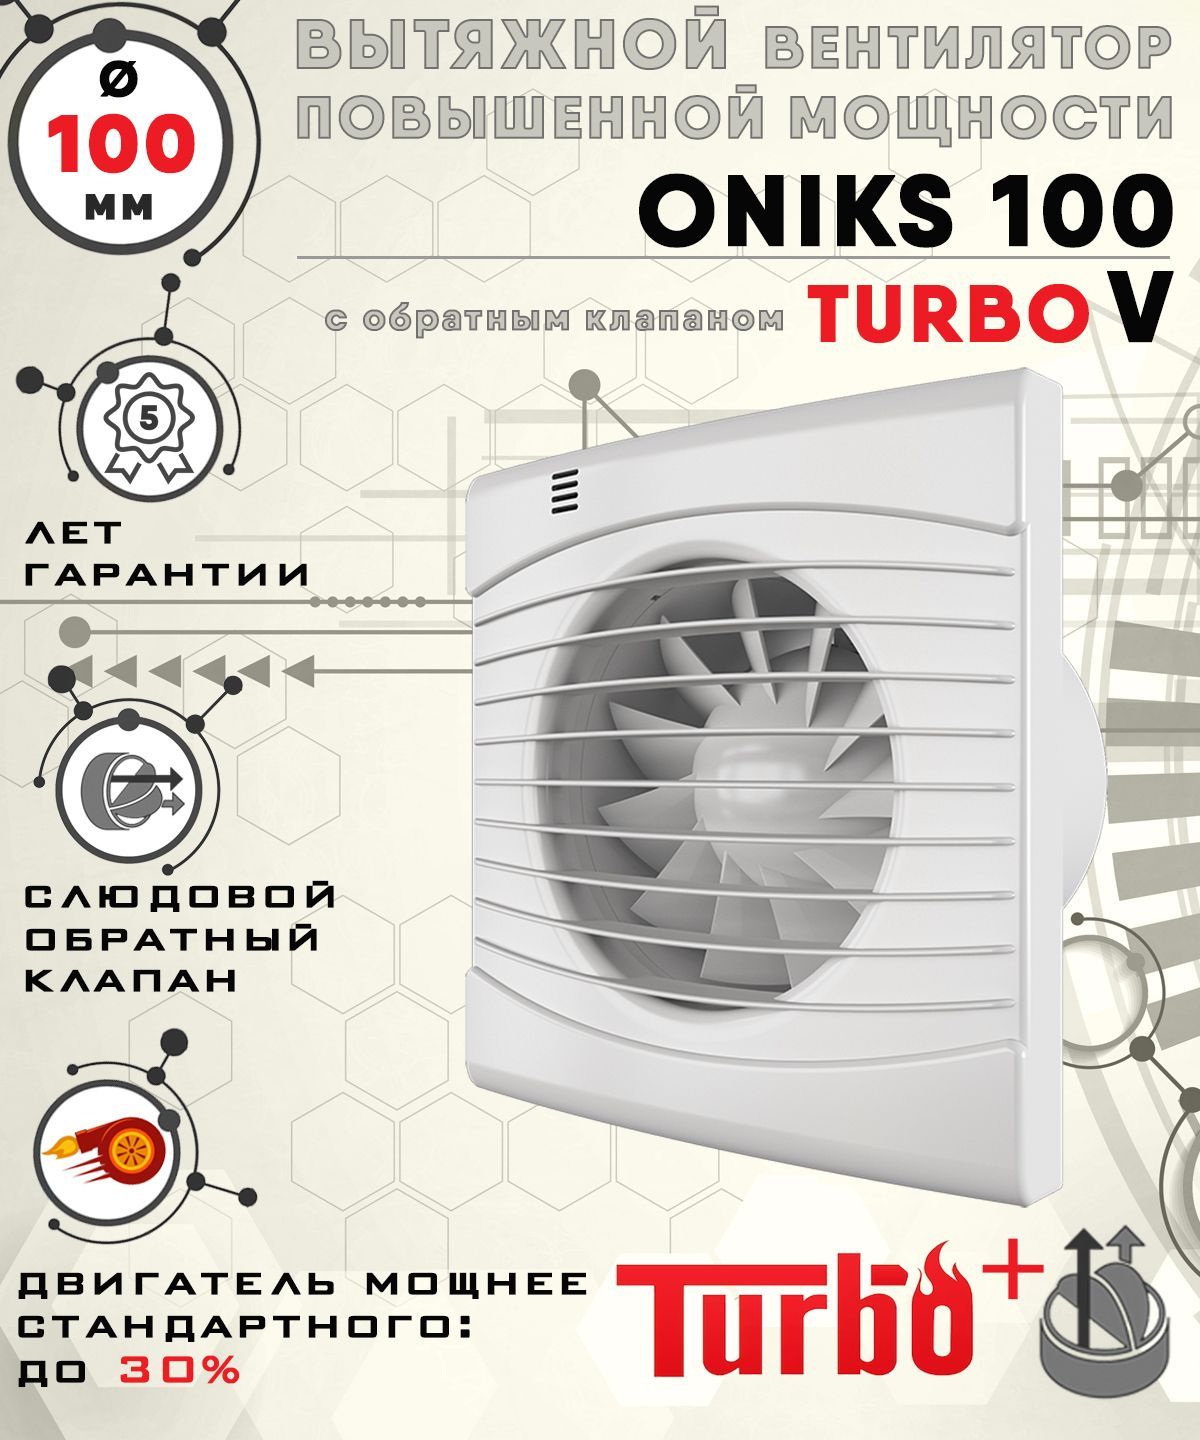 фото Oniks 100 turbo v вентилятор вытяжной диаметр 100 мм zernberg